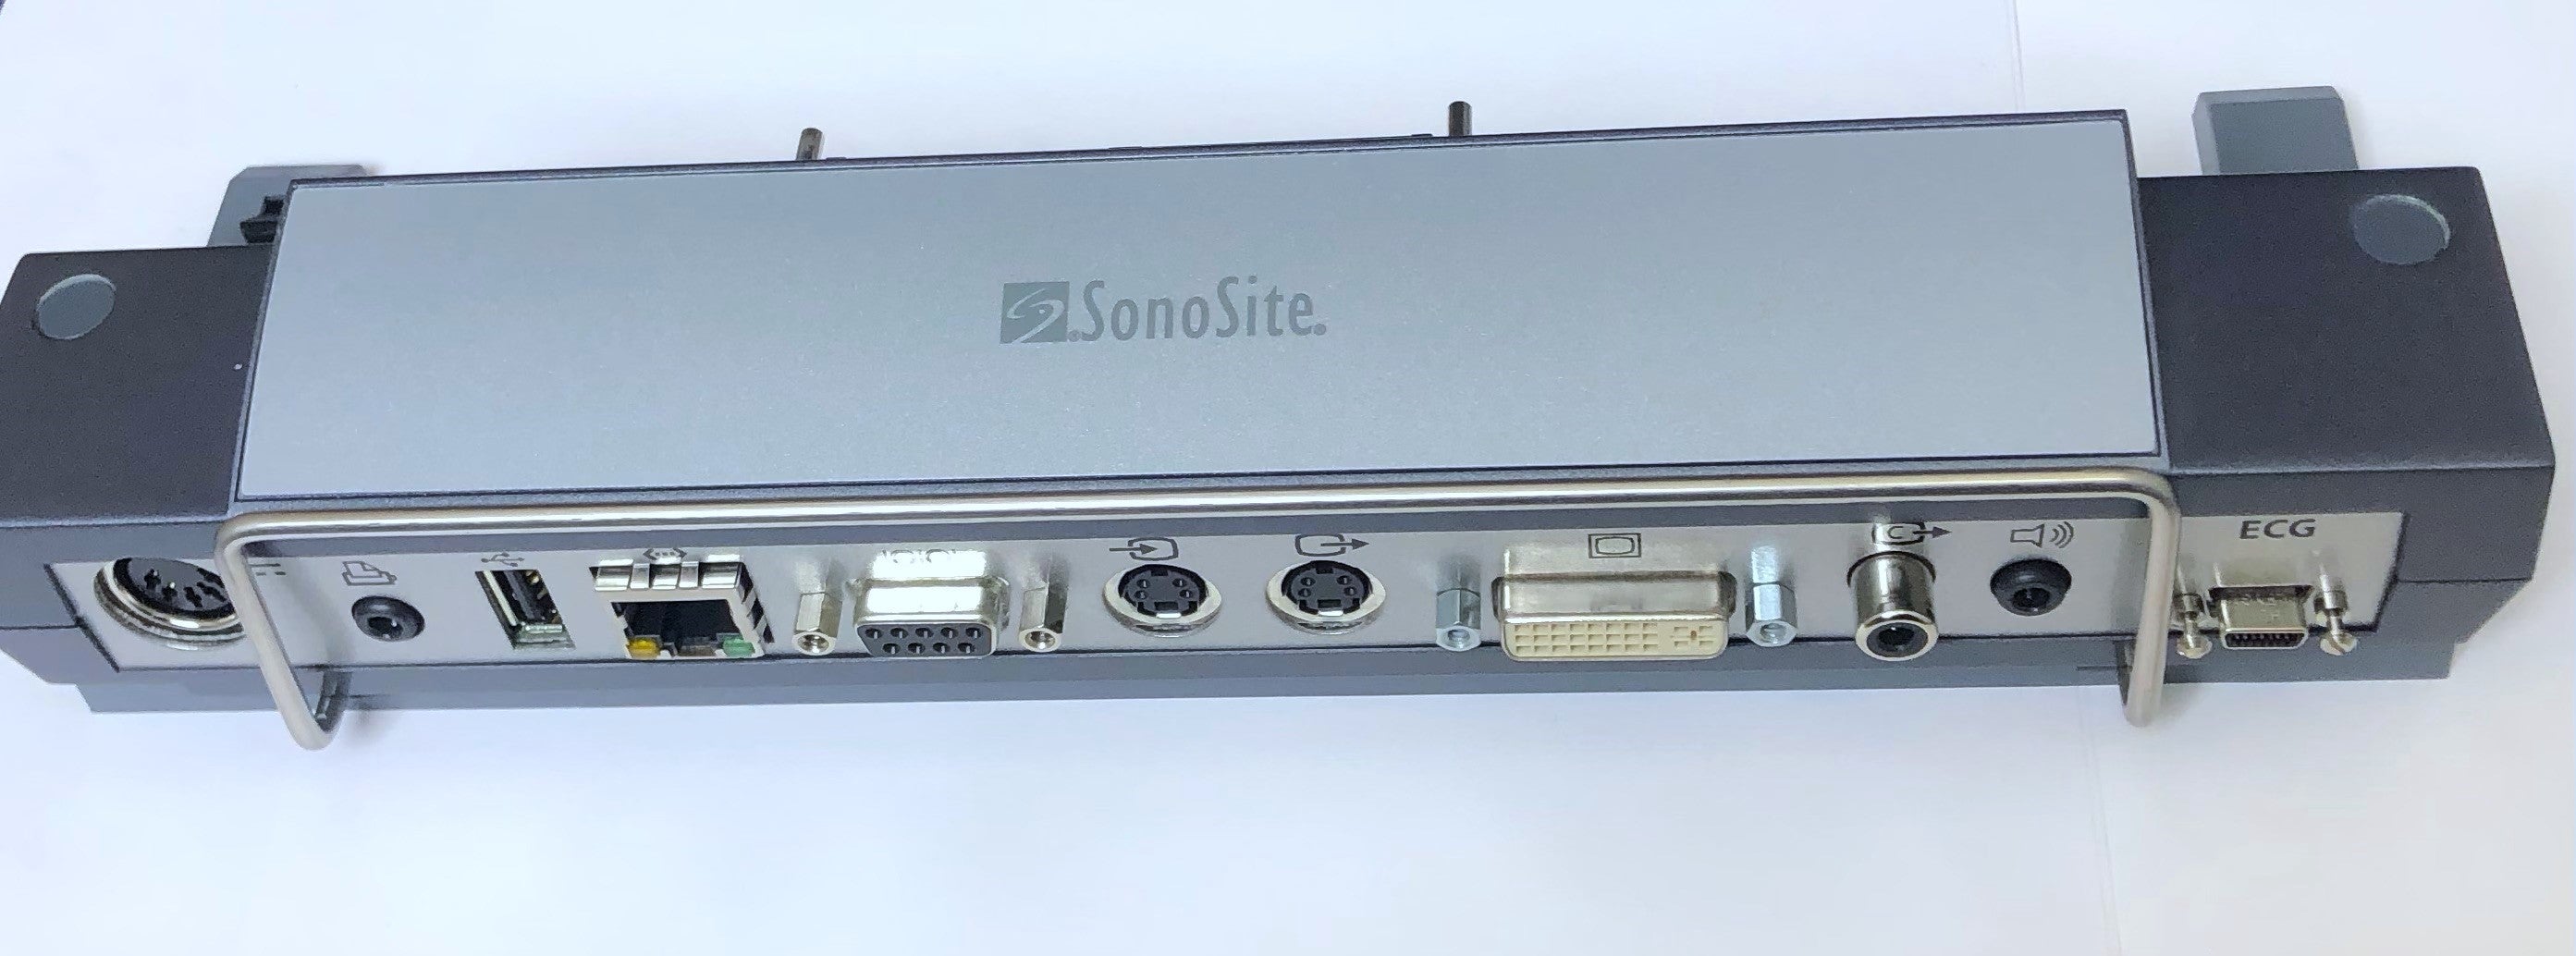 SonoSite M Series Mini-Dock for M-Turbo Ultrasound Machine